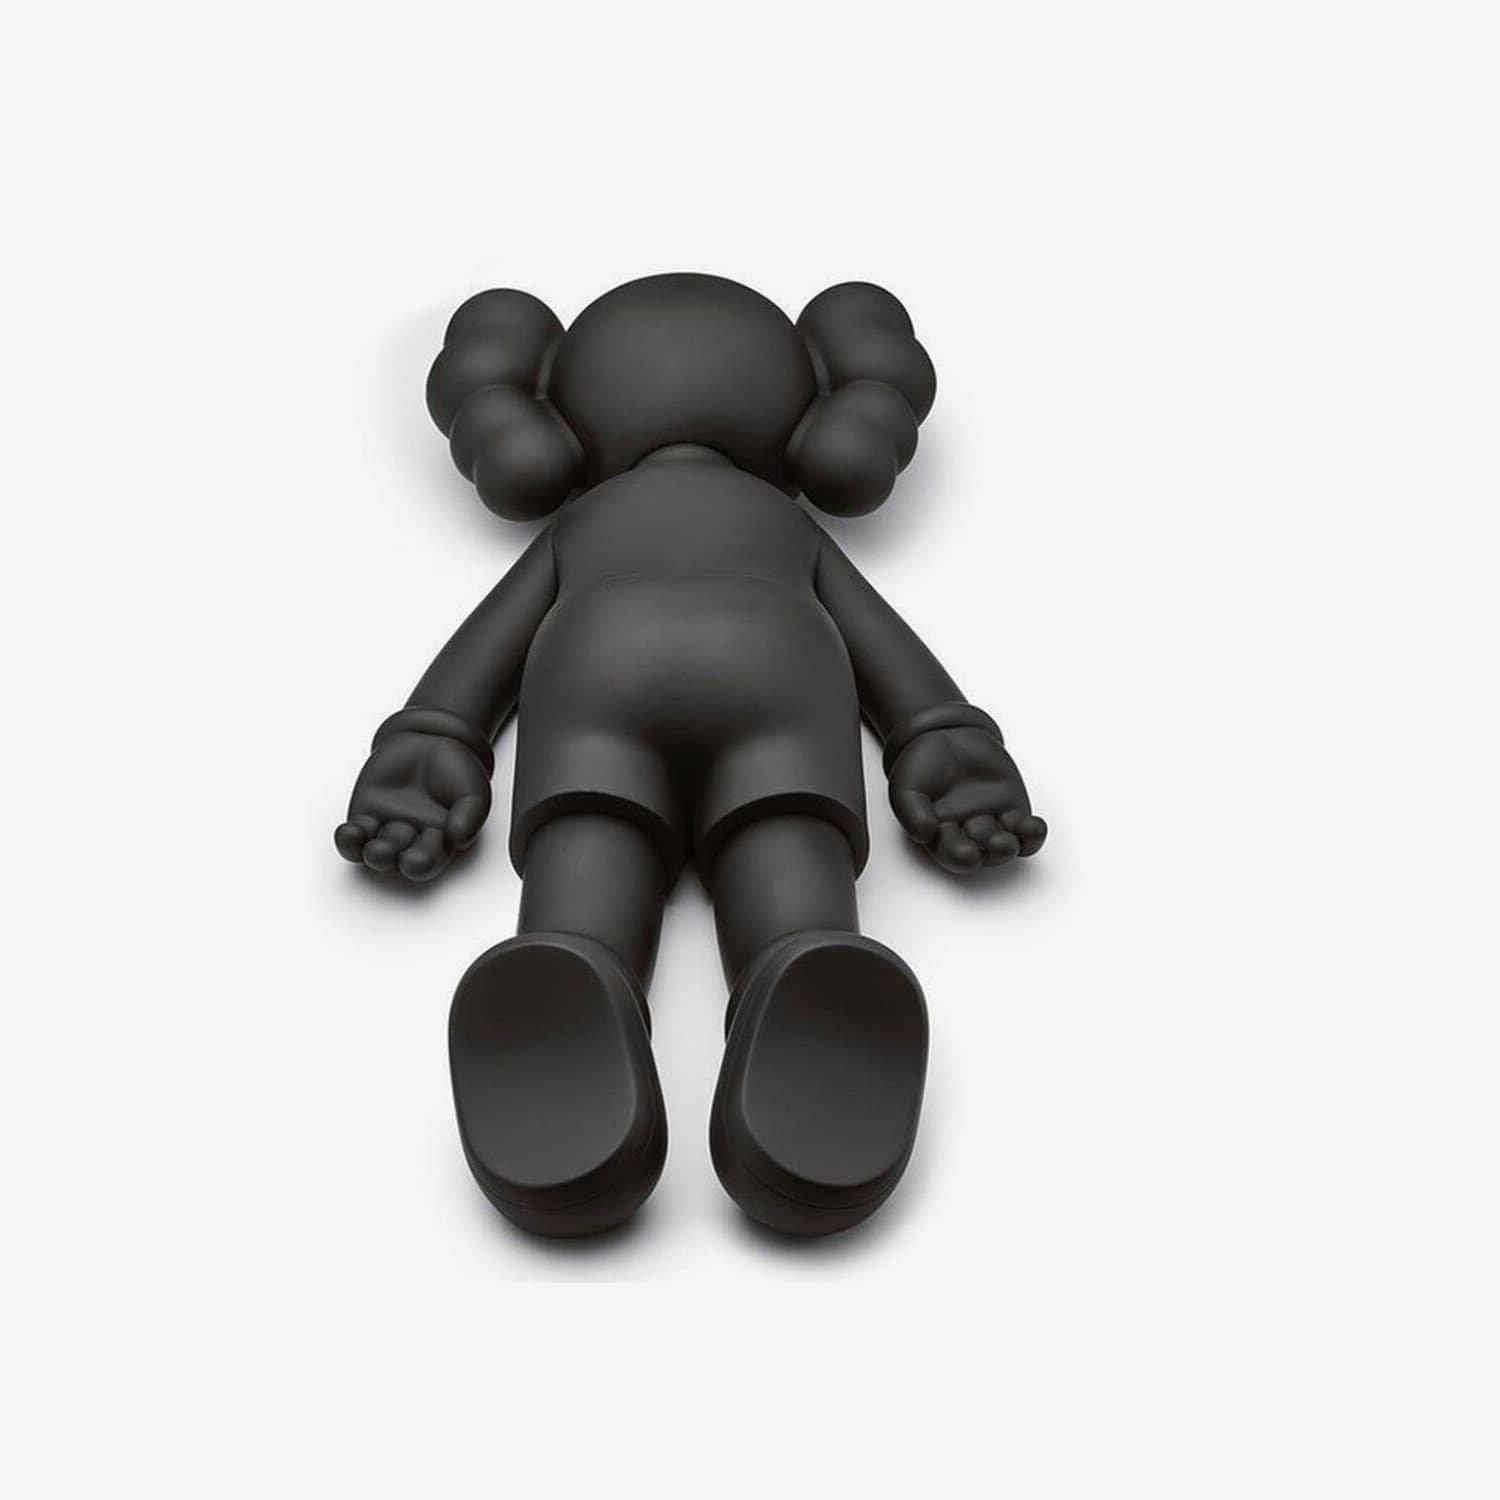 Companion 2020 black vinyl sculpture by Kaws - Dope! Gallery